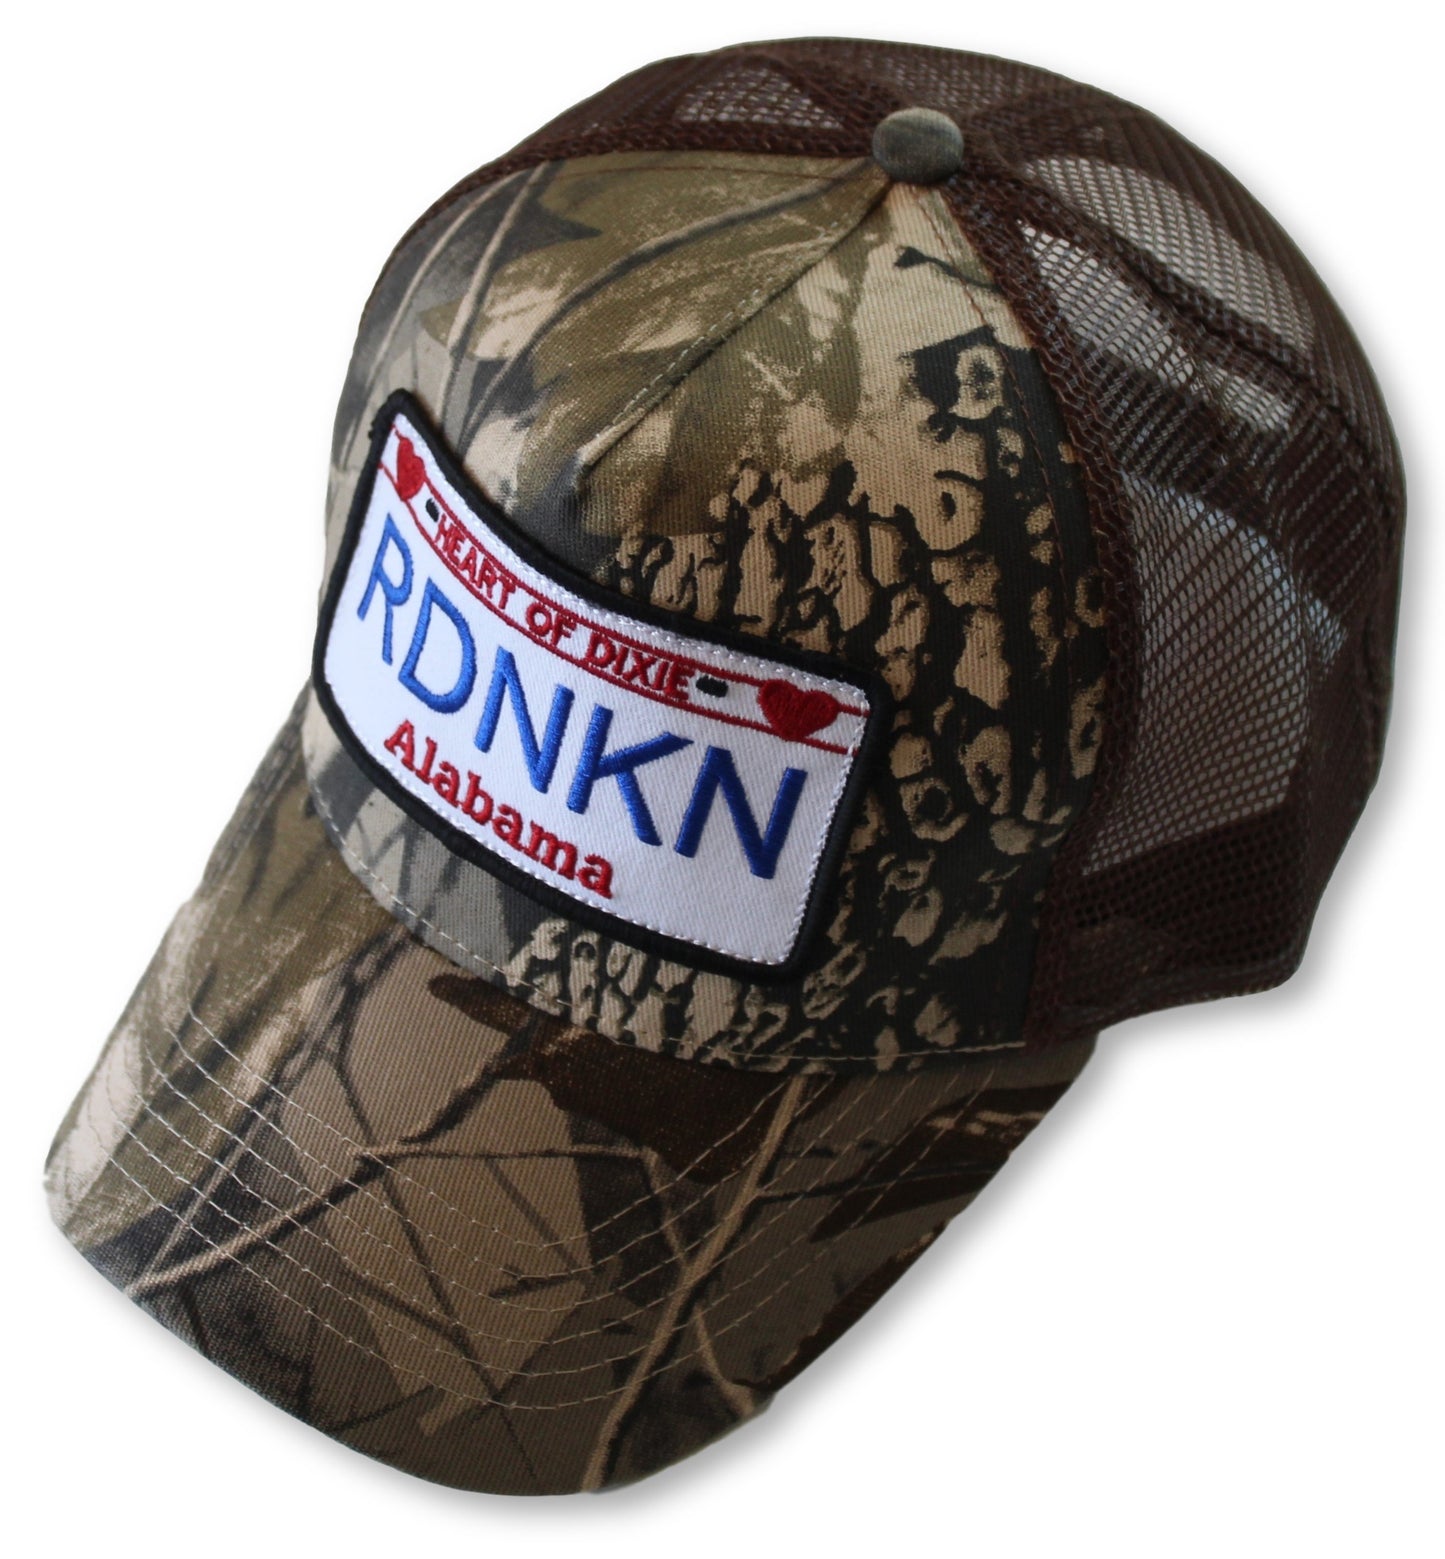 Alabama RDNKN Mesh Snapback Trucker hat